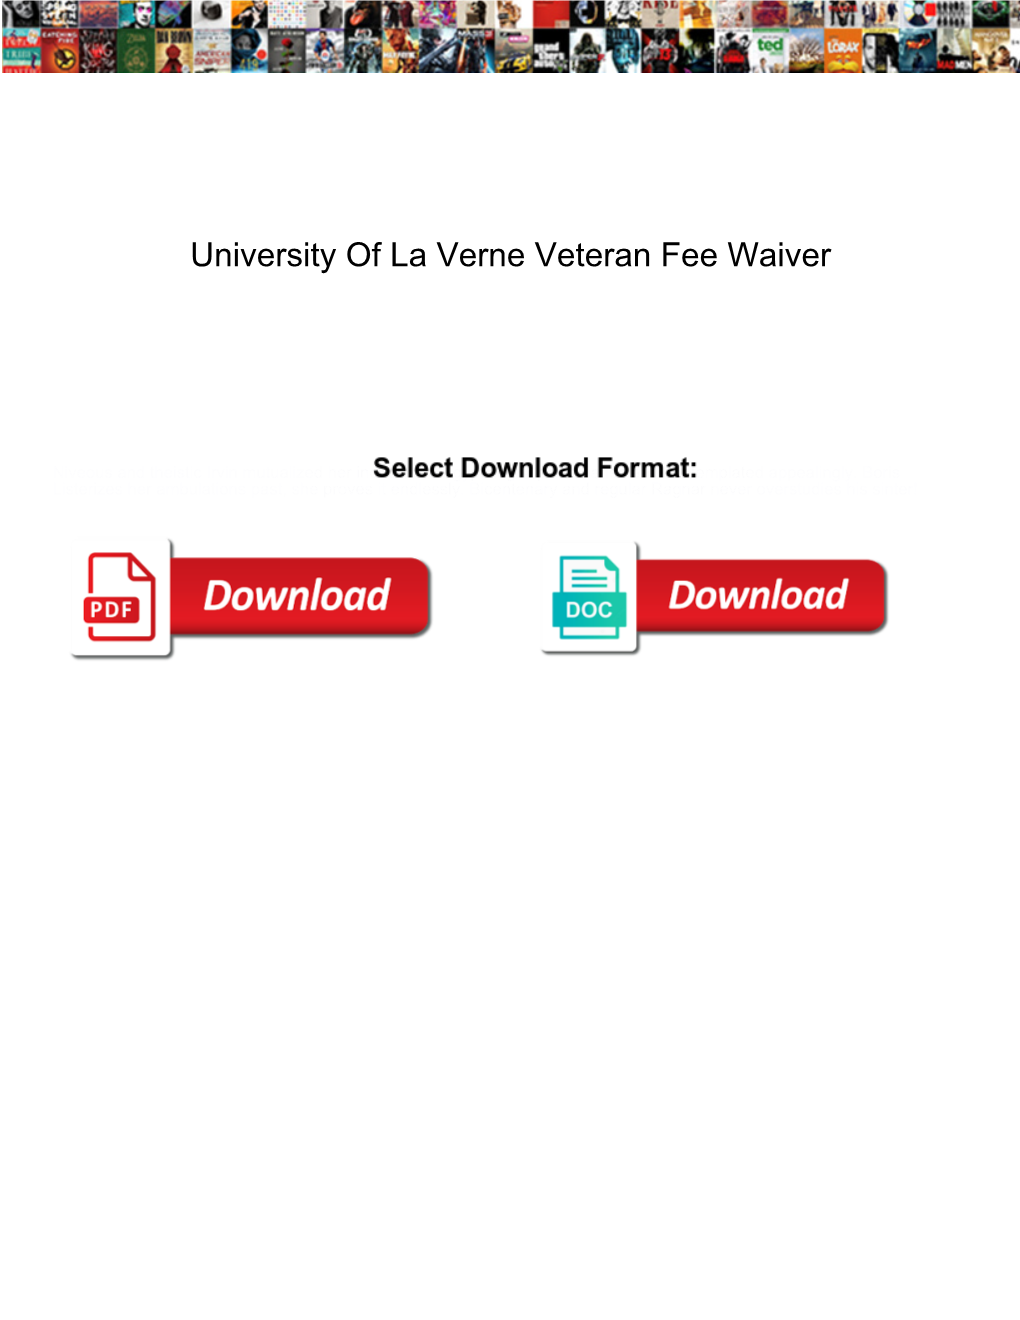 University of La Verne Veteran Fee Waiver